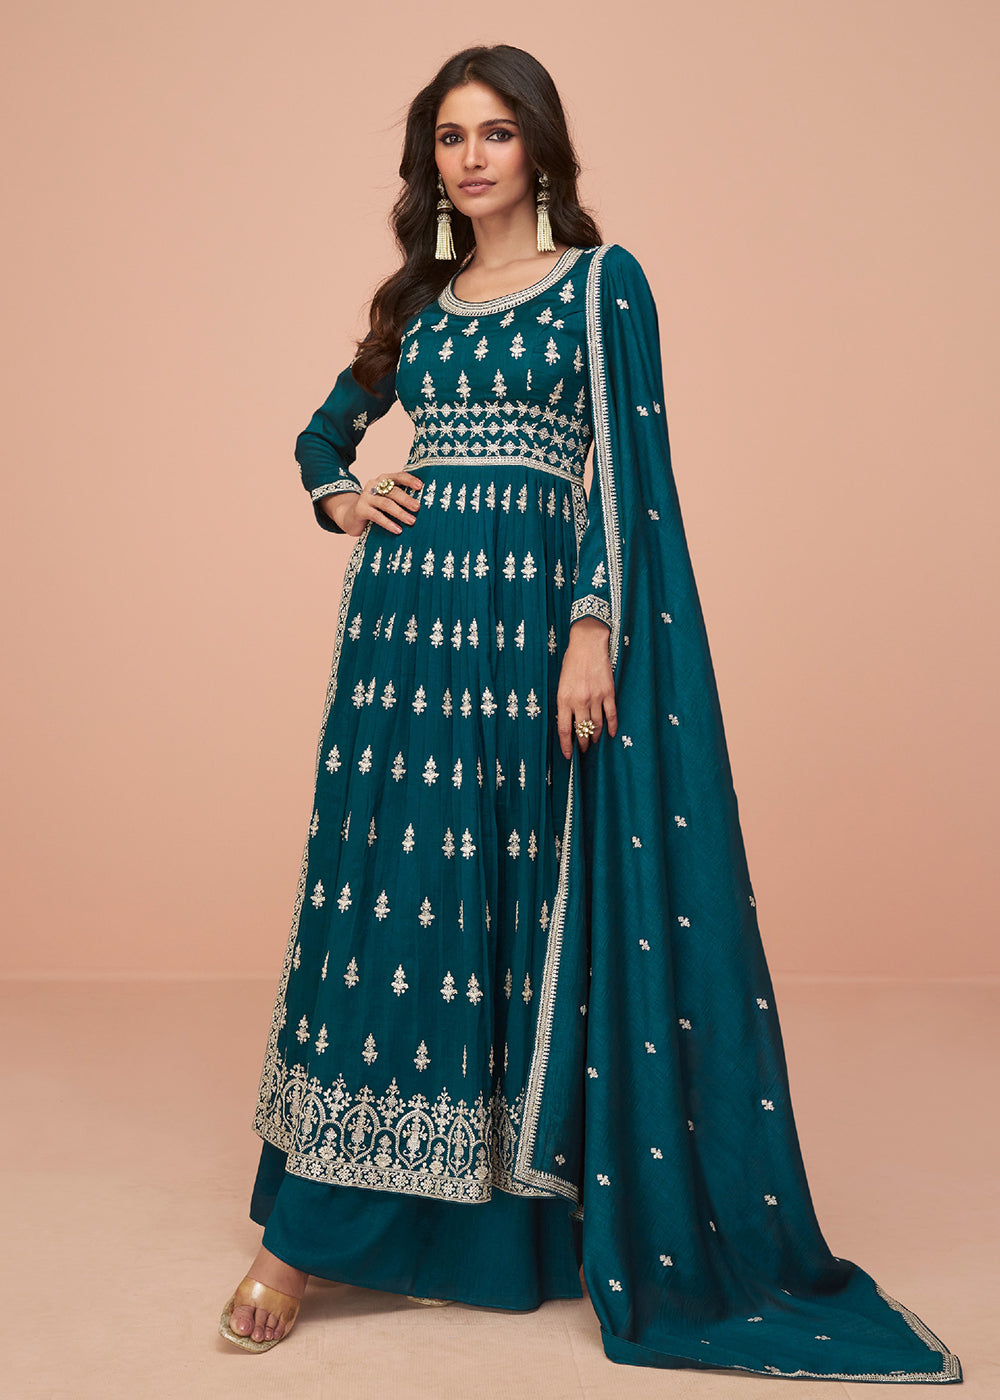 Buy Now Rama Blue Wedding Wear Silk Trendy Palazzo Suit Online in USA, UK, Canada, Germany, Australia & Worldwide at Empress Clothing. 